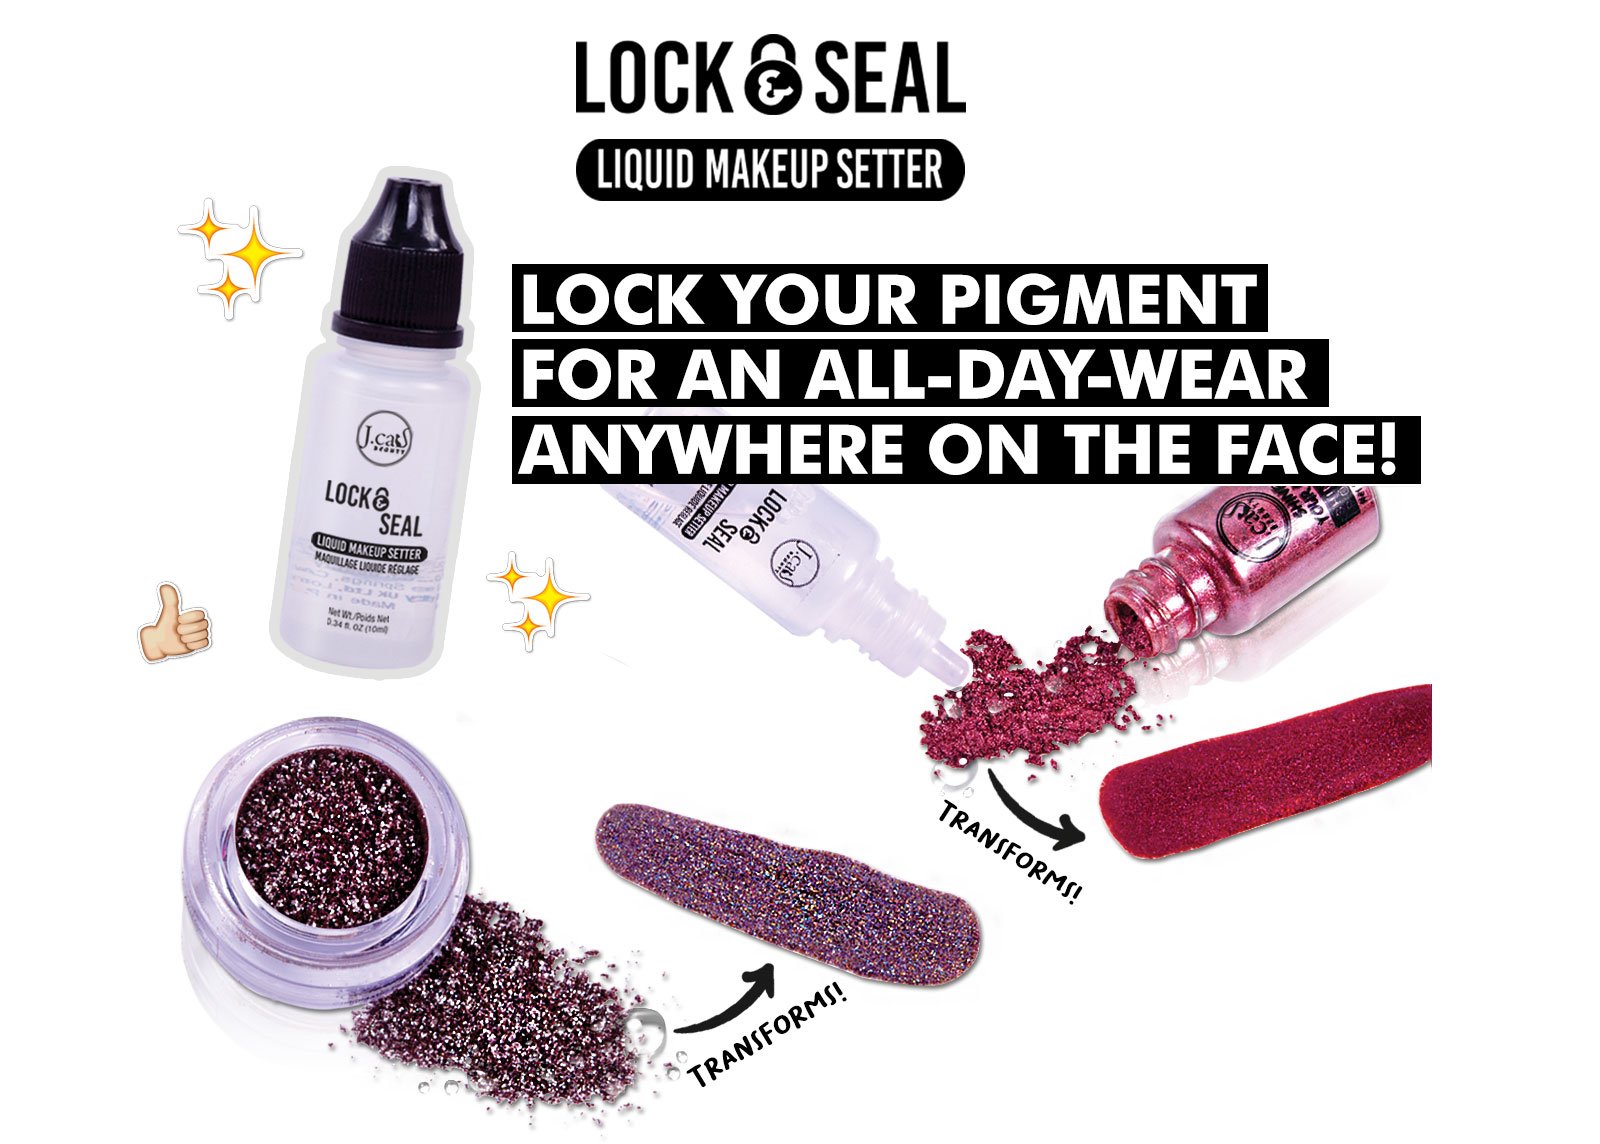 J. Cat Beauty Lock & Seal Liquid Makeup Setter